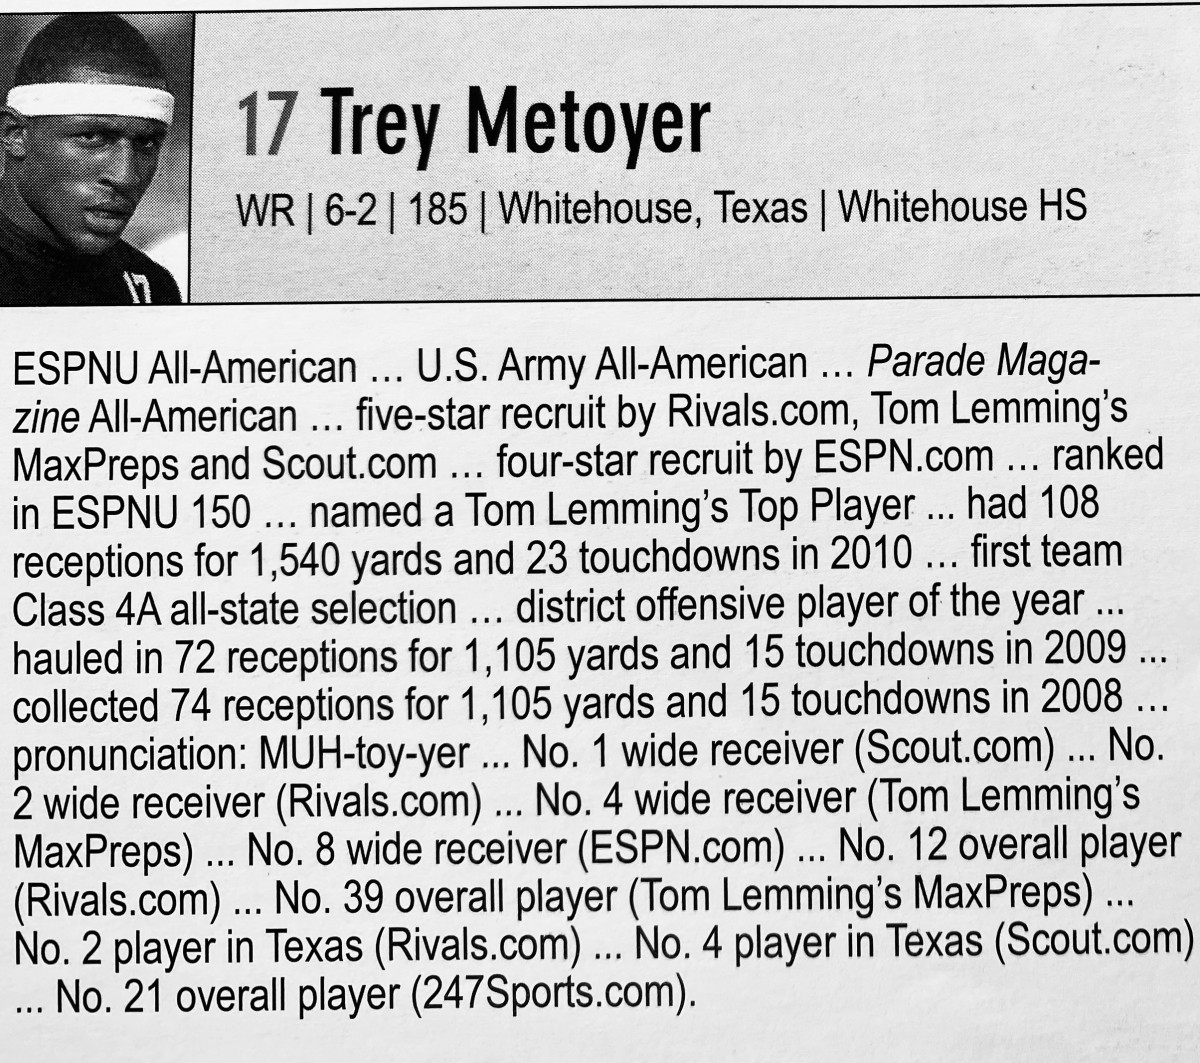 Trey Metoyer's bio in the 2011 OU media guide